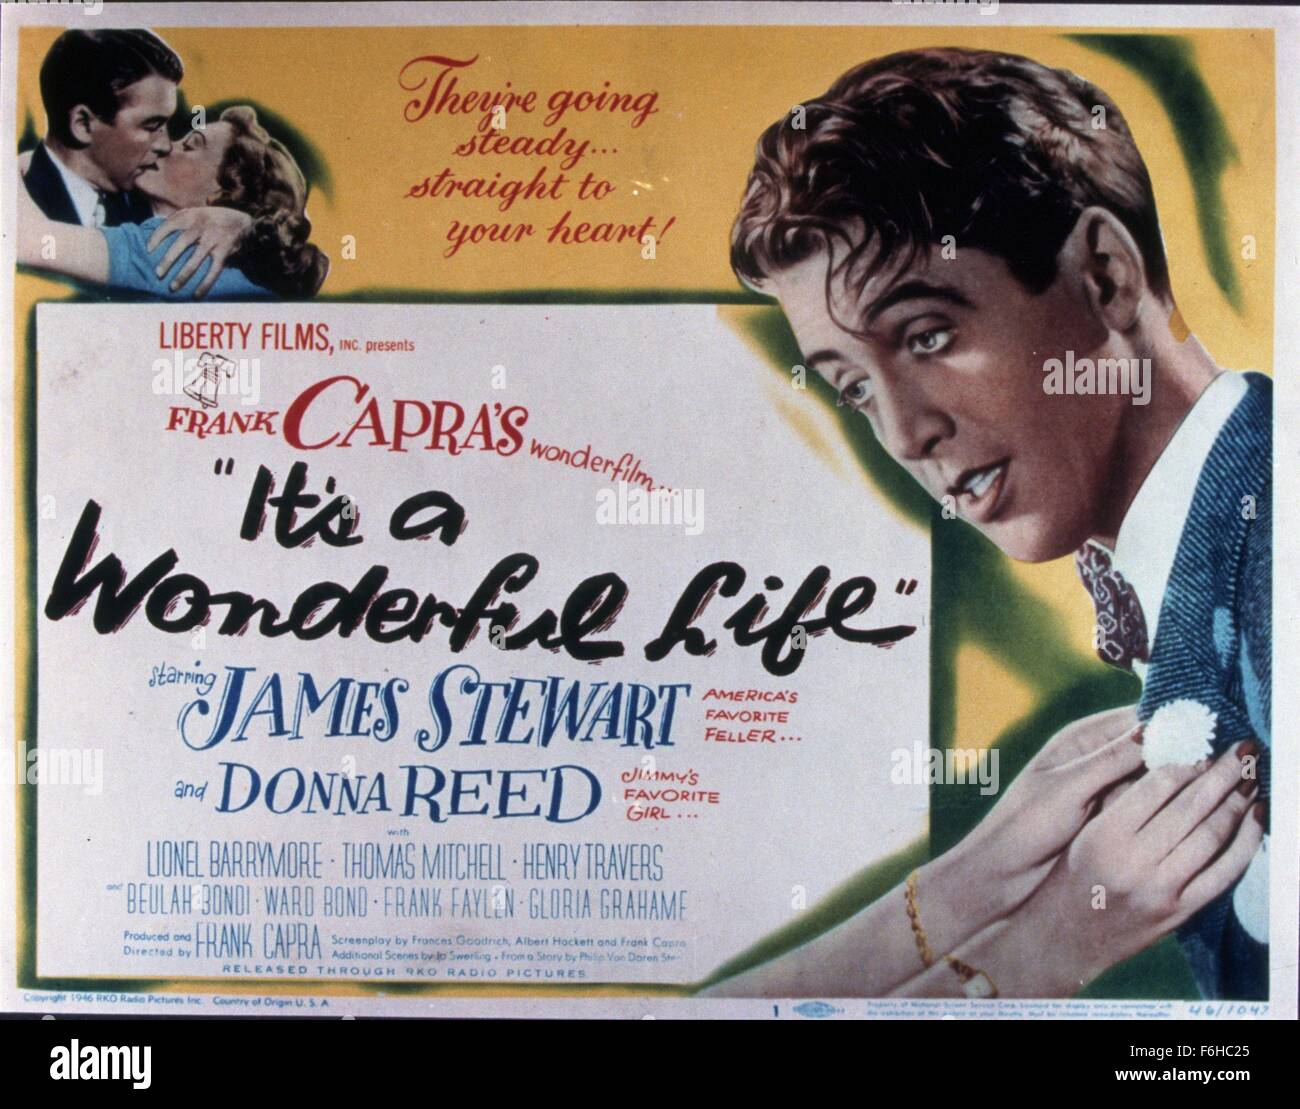 1946, Film Title: IT'S A WONDERFUL LIFE, Director: FRANK CAPRA, Studio ...